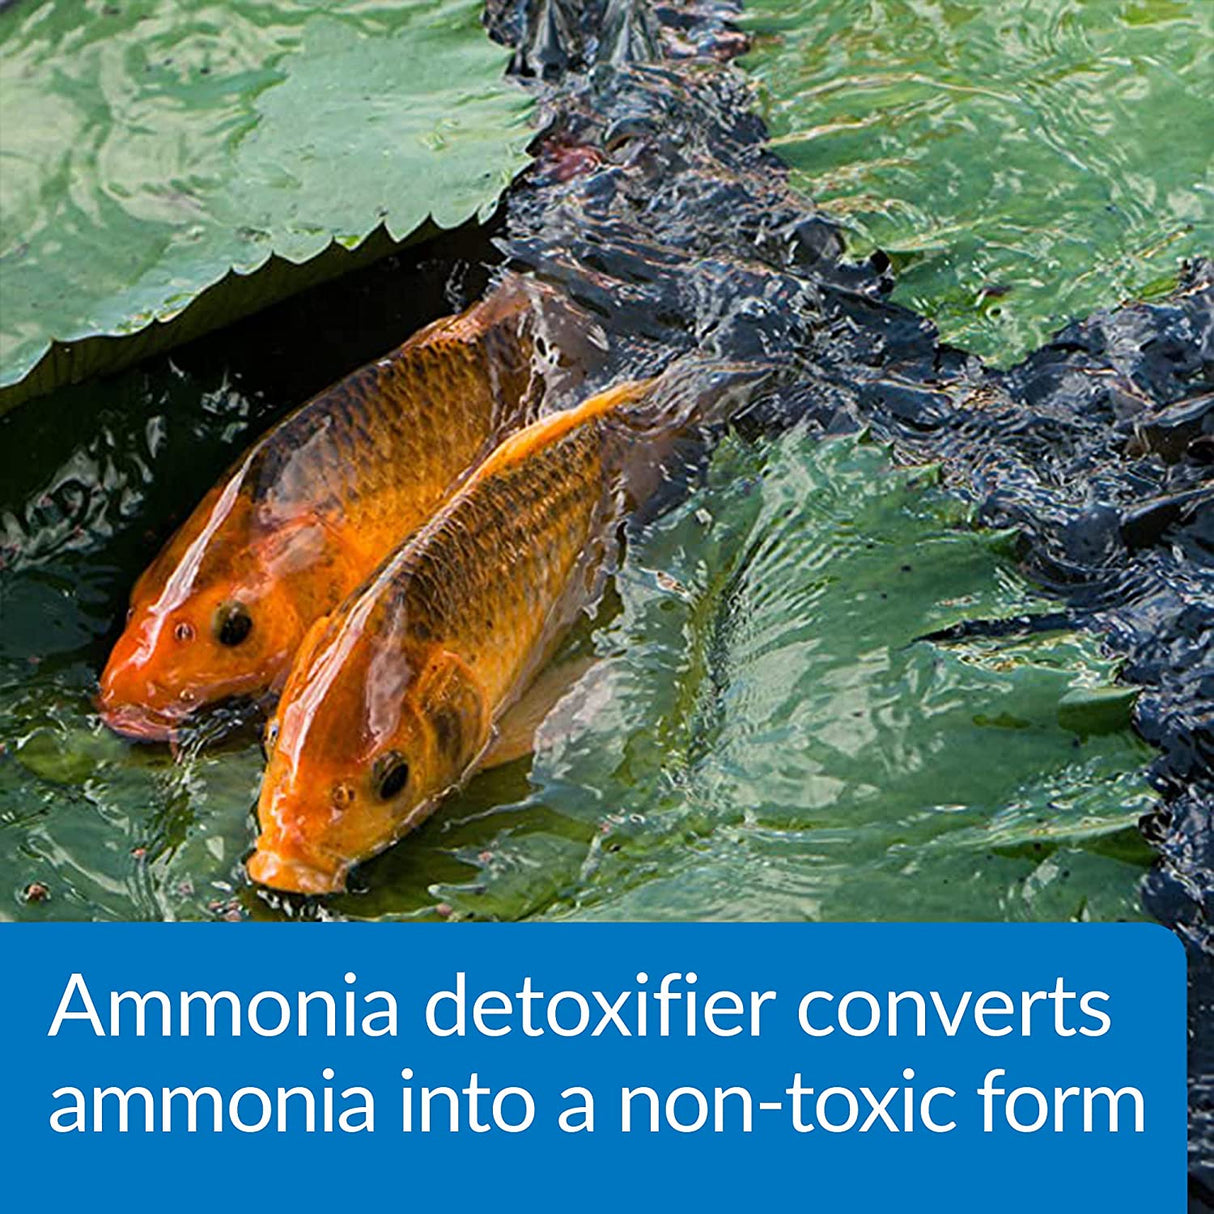 API Ammo Lock Ammonia Detoxifier for Ponds - PetMountain.com